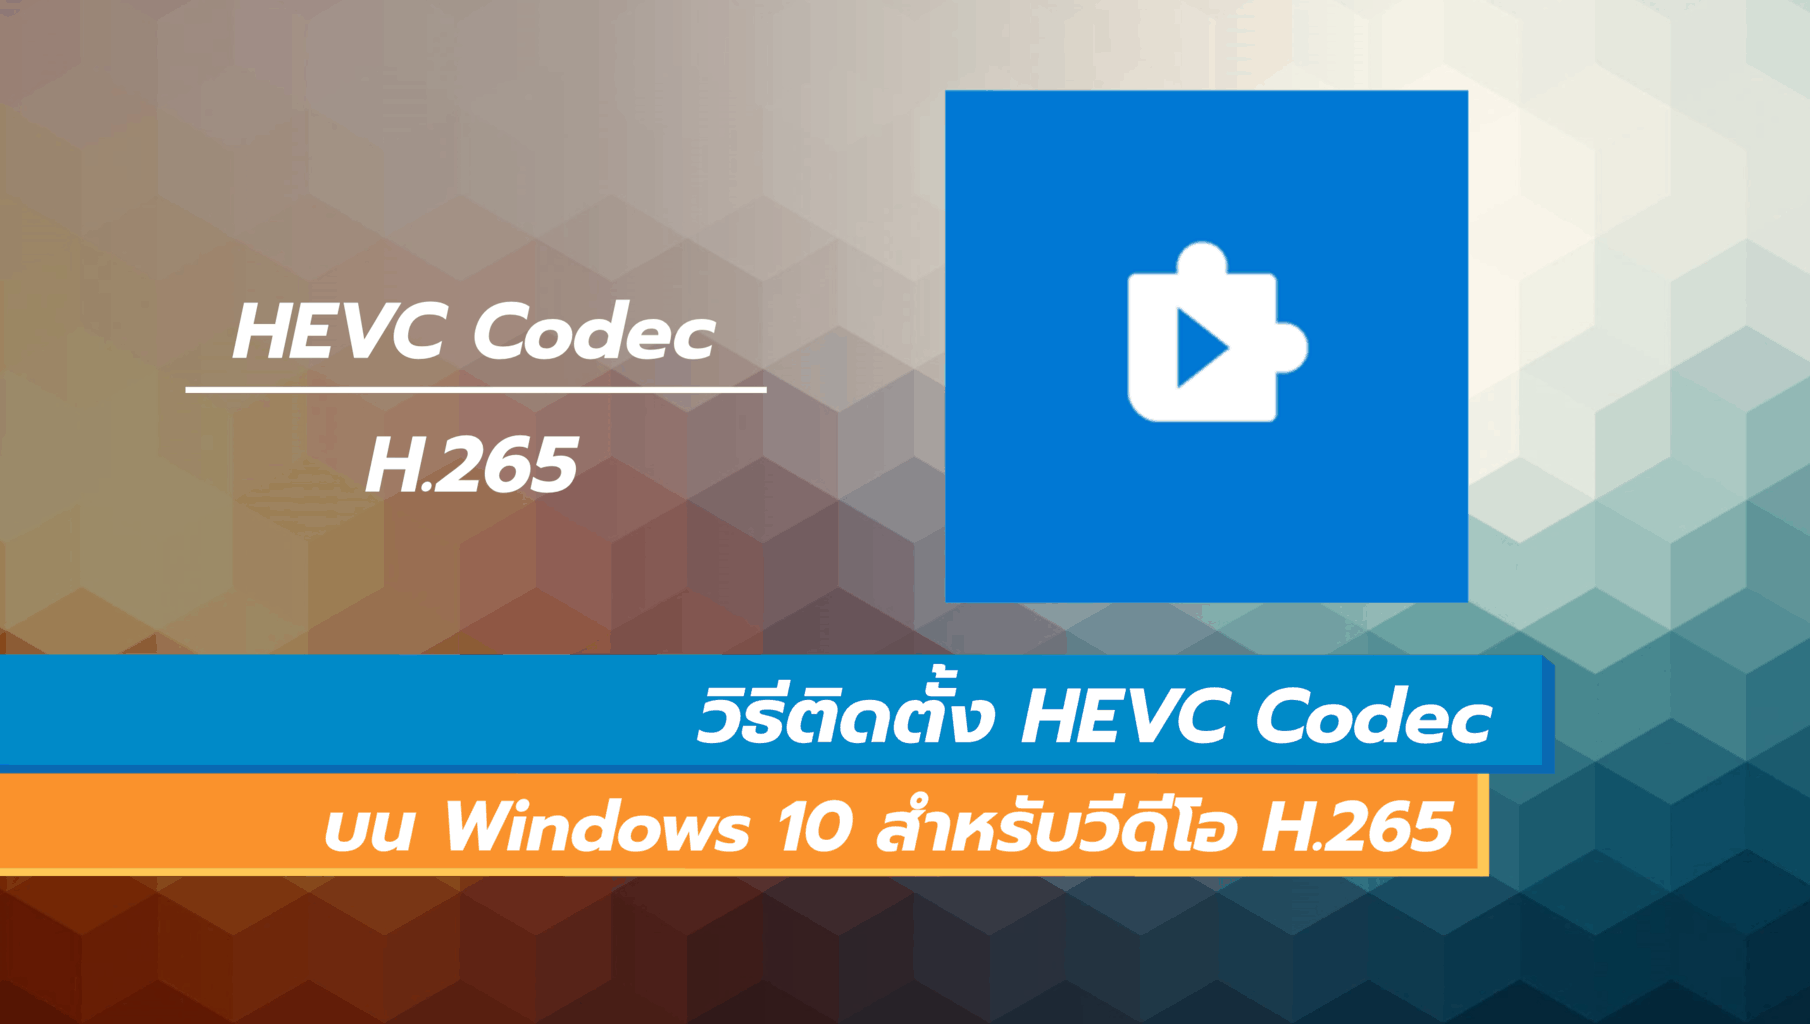 hevc codec not installed windows 10